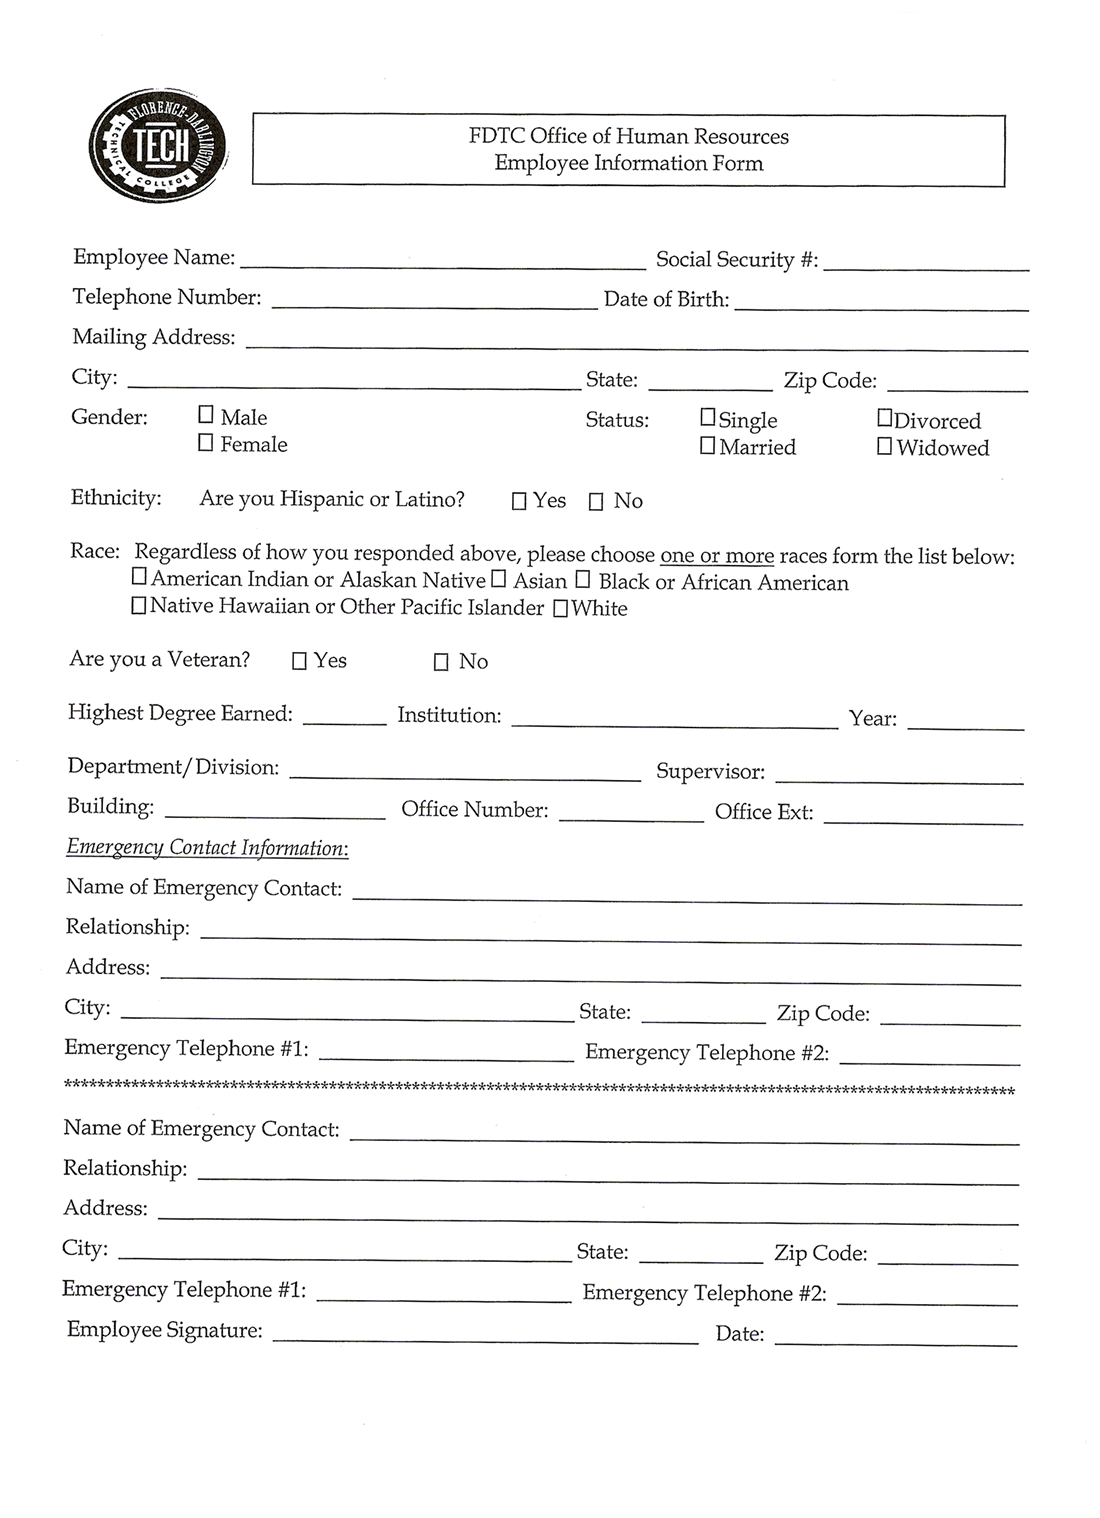 Employee Information Sheet